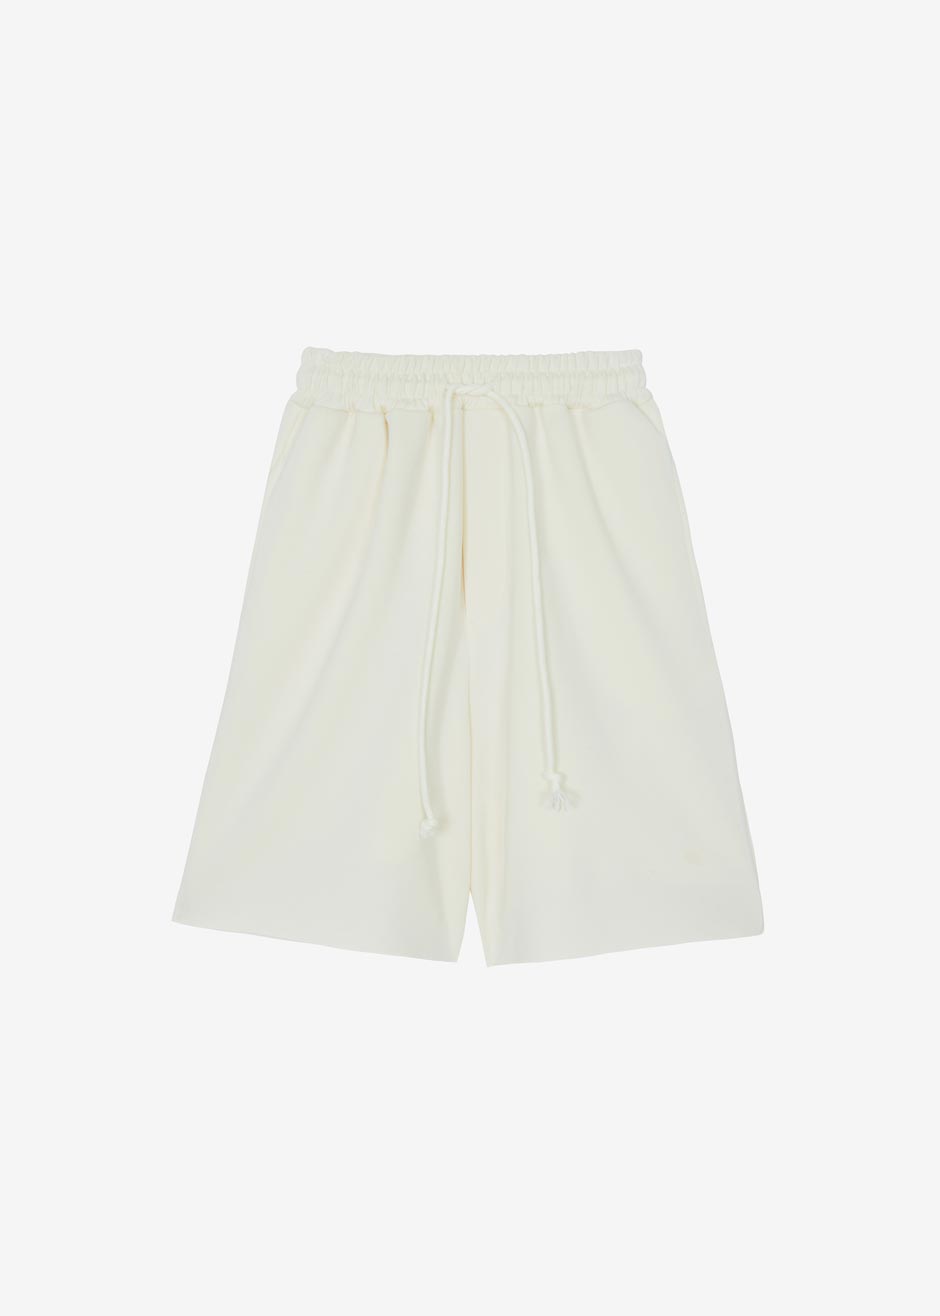 Lotte Neoprene Sweat Shorts - Cream - 8